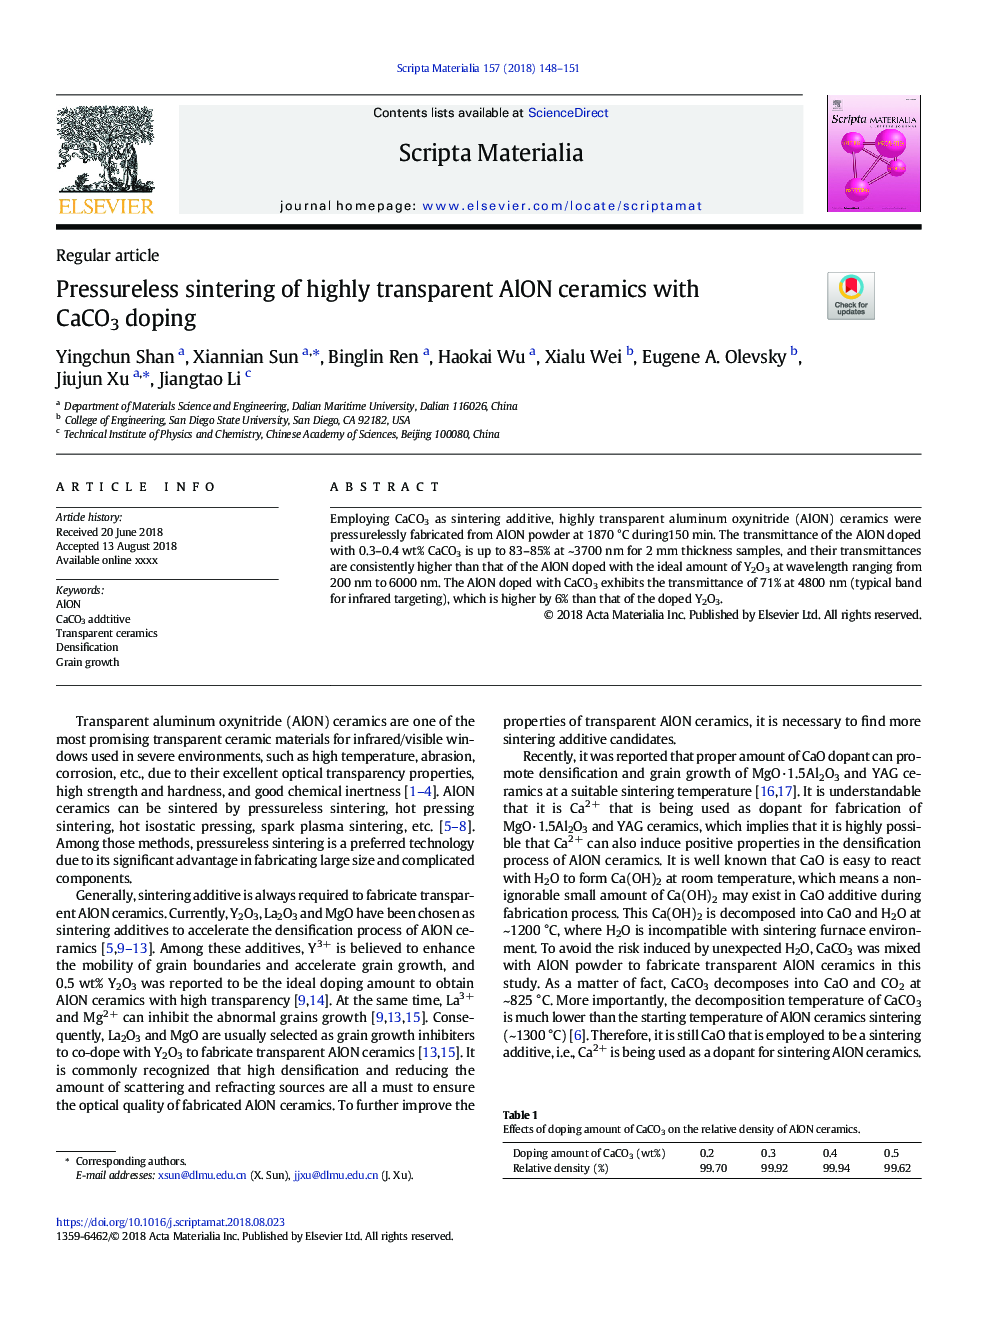 Pressureless sintering of highly transparent AlON ceramics with CaCO3 doping